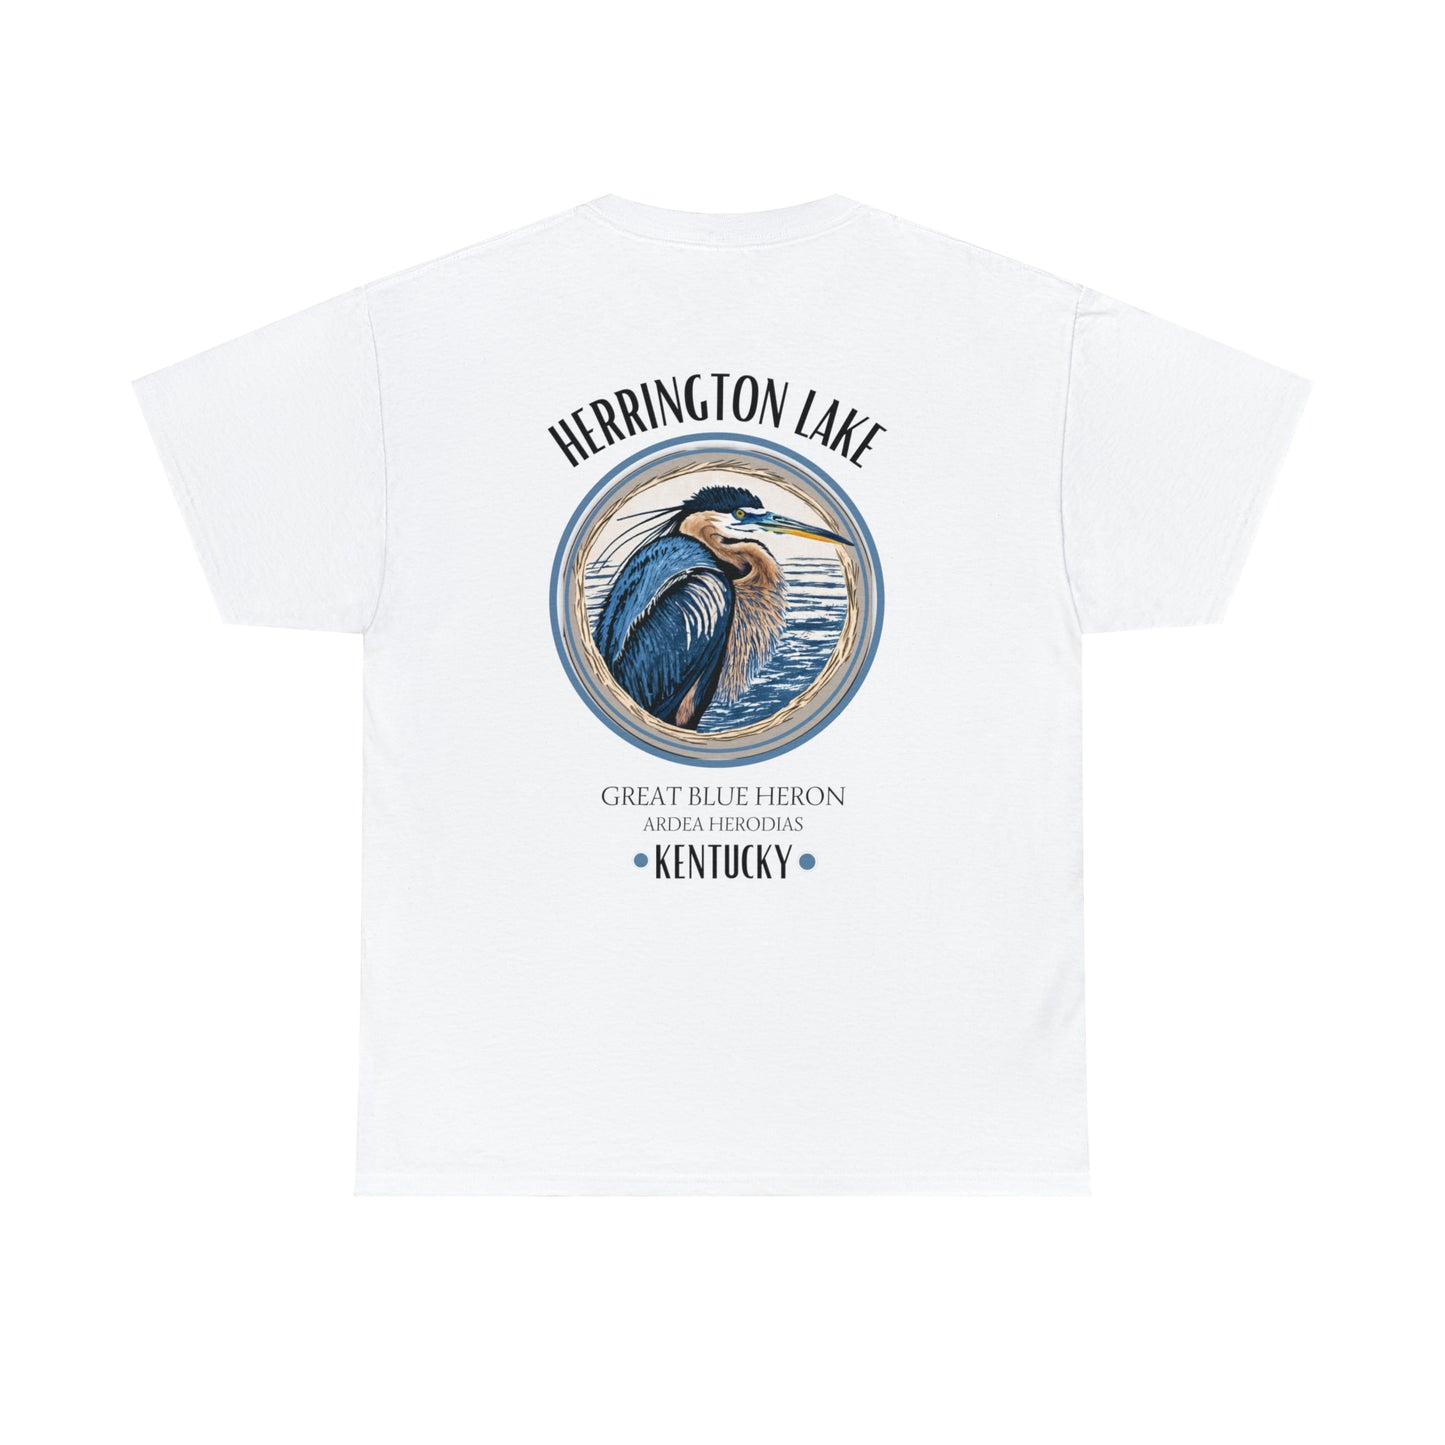 Great Blue Heron - Double-Sided Herrington Wildlife Collection Cotton Tee